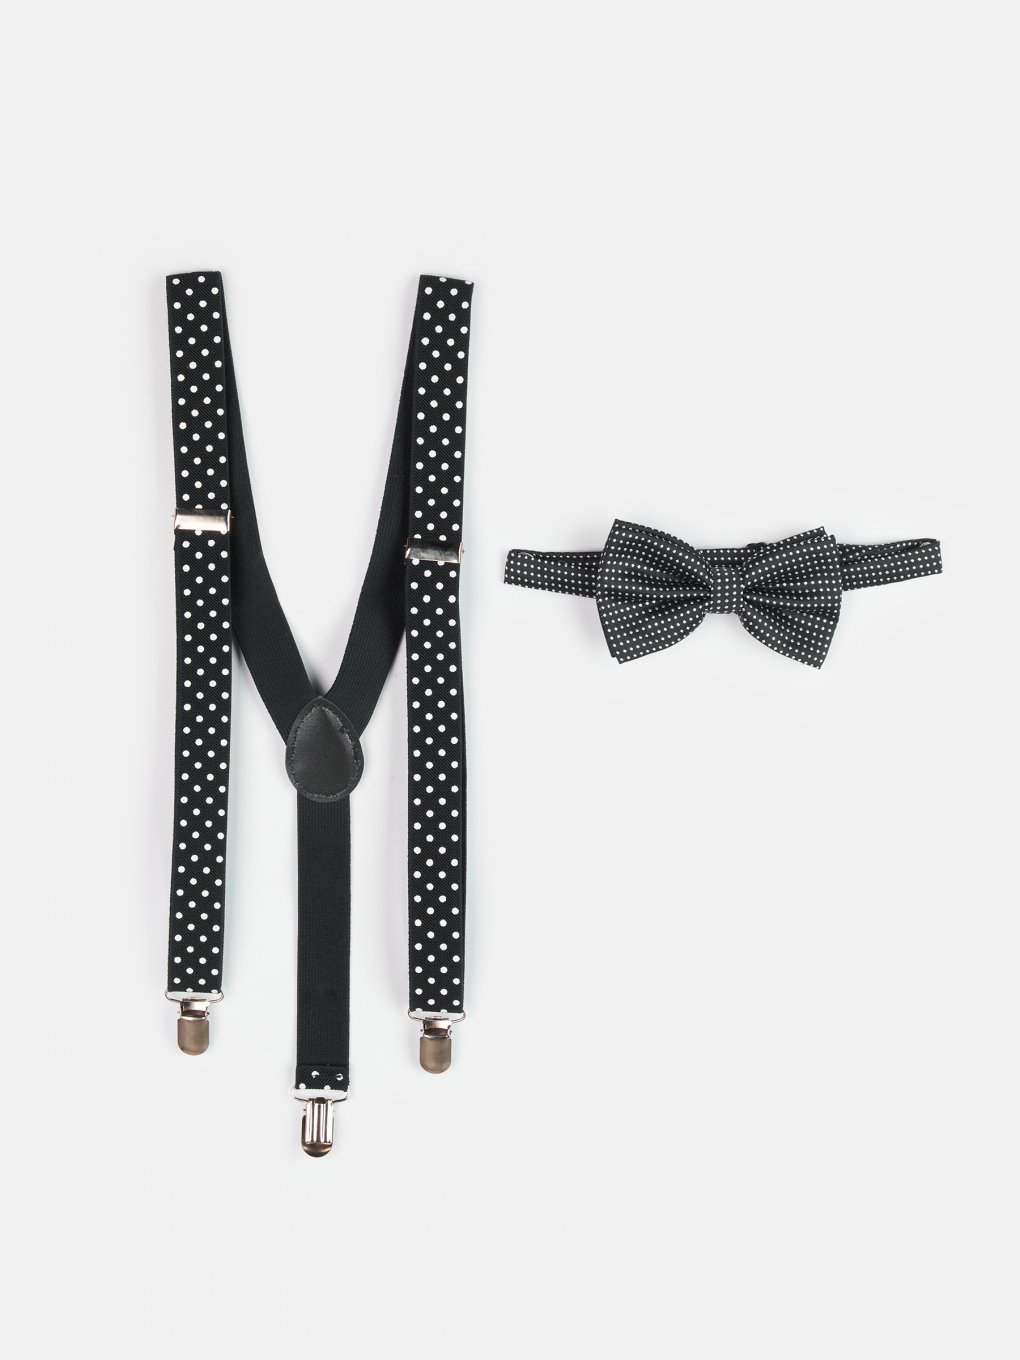 Braces and bow tie